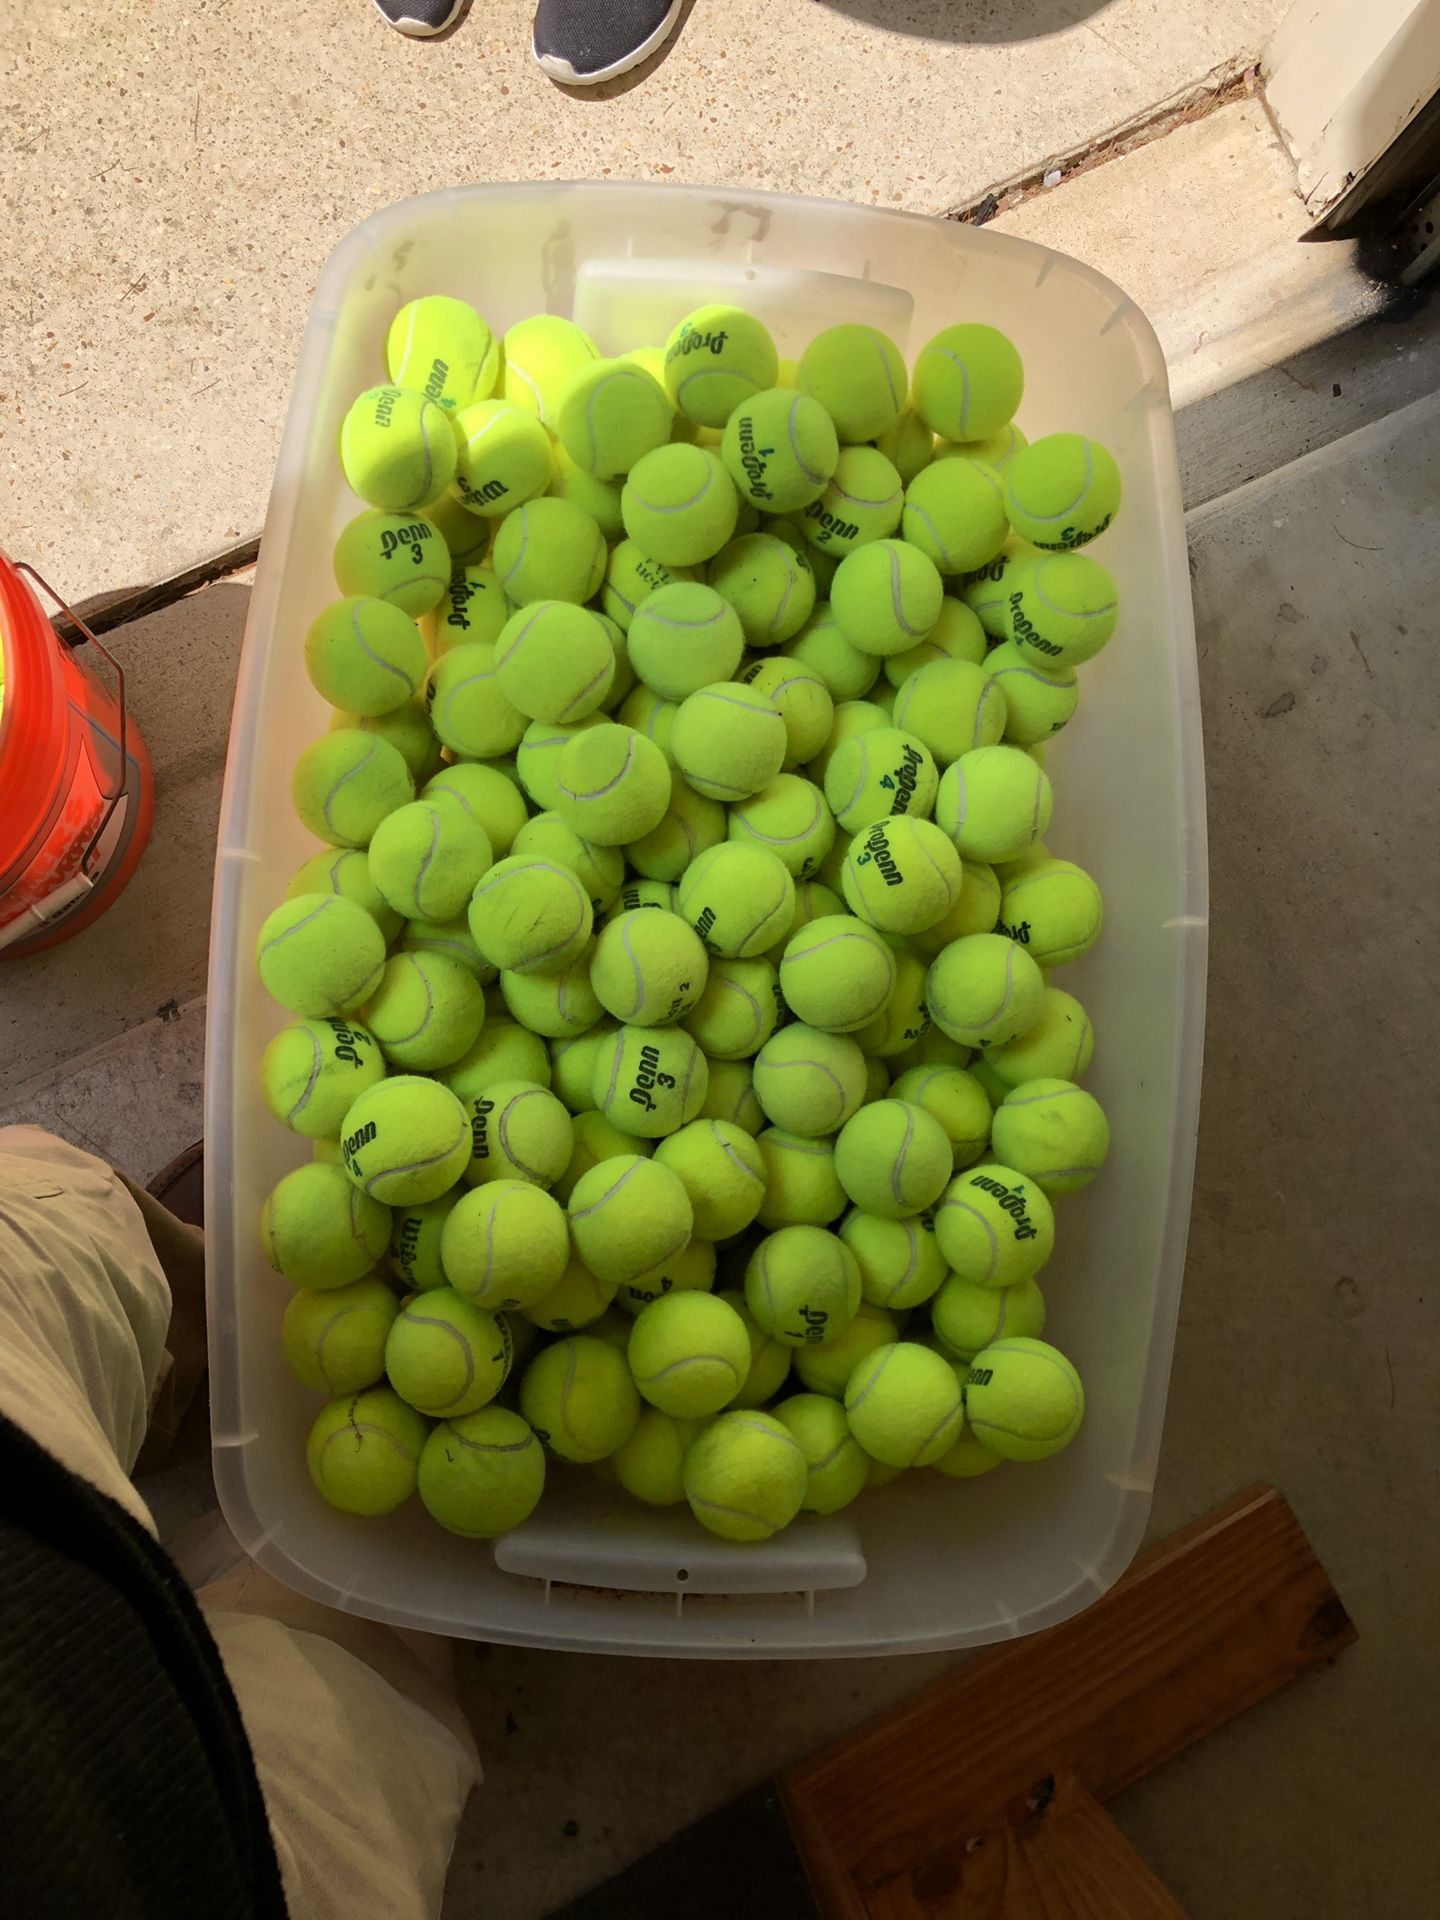 More than 500 used yellow tennis balls